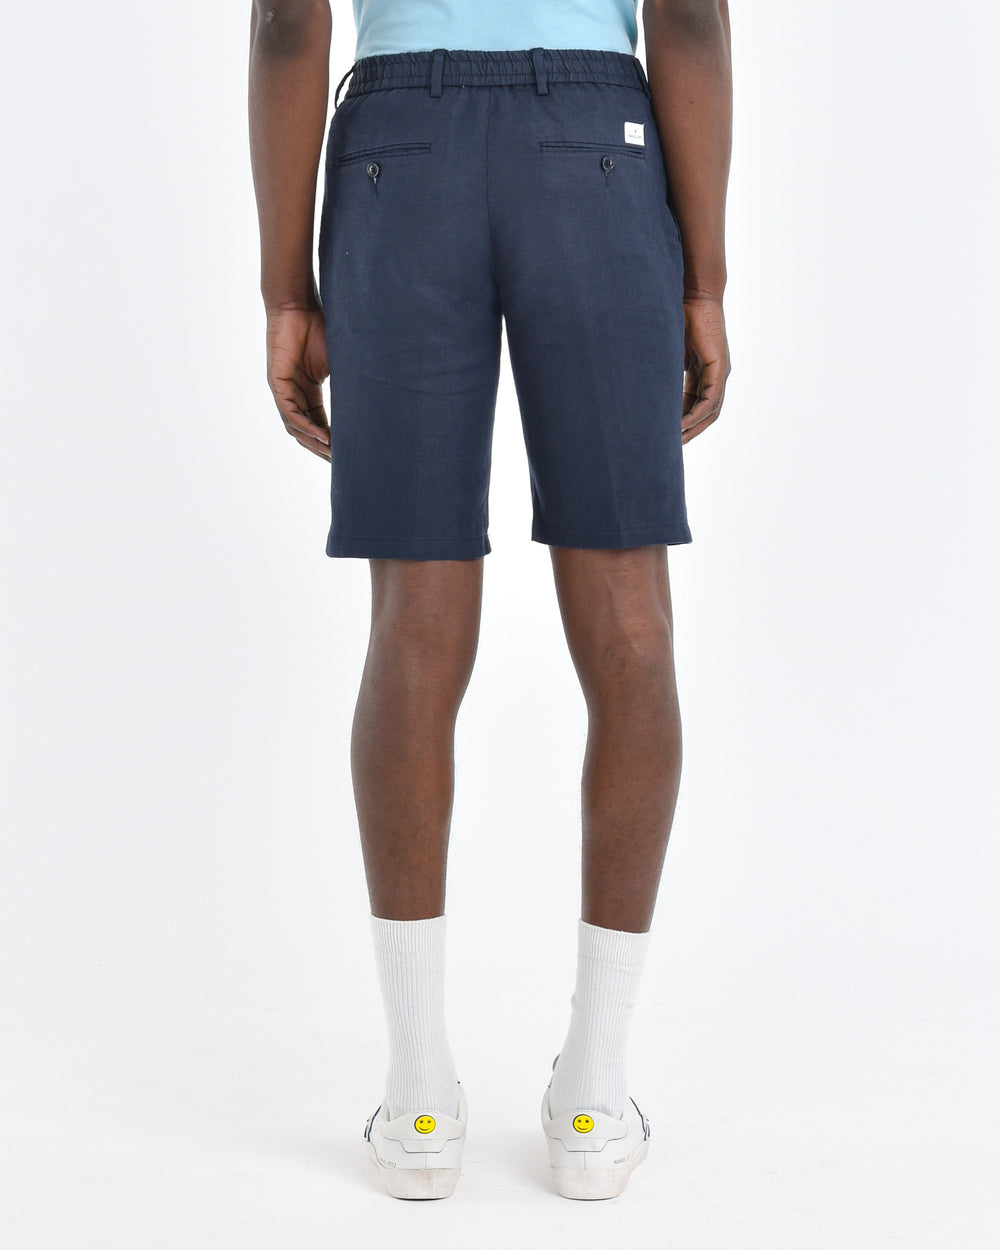 blue linen pinces bermuda shorts